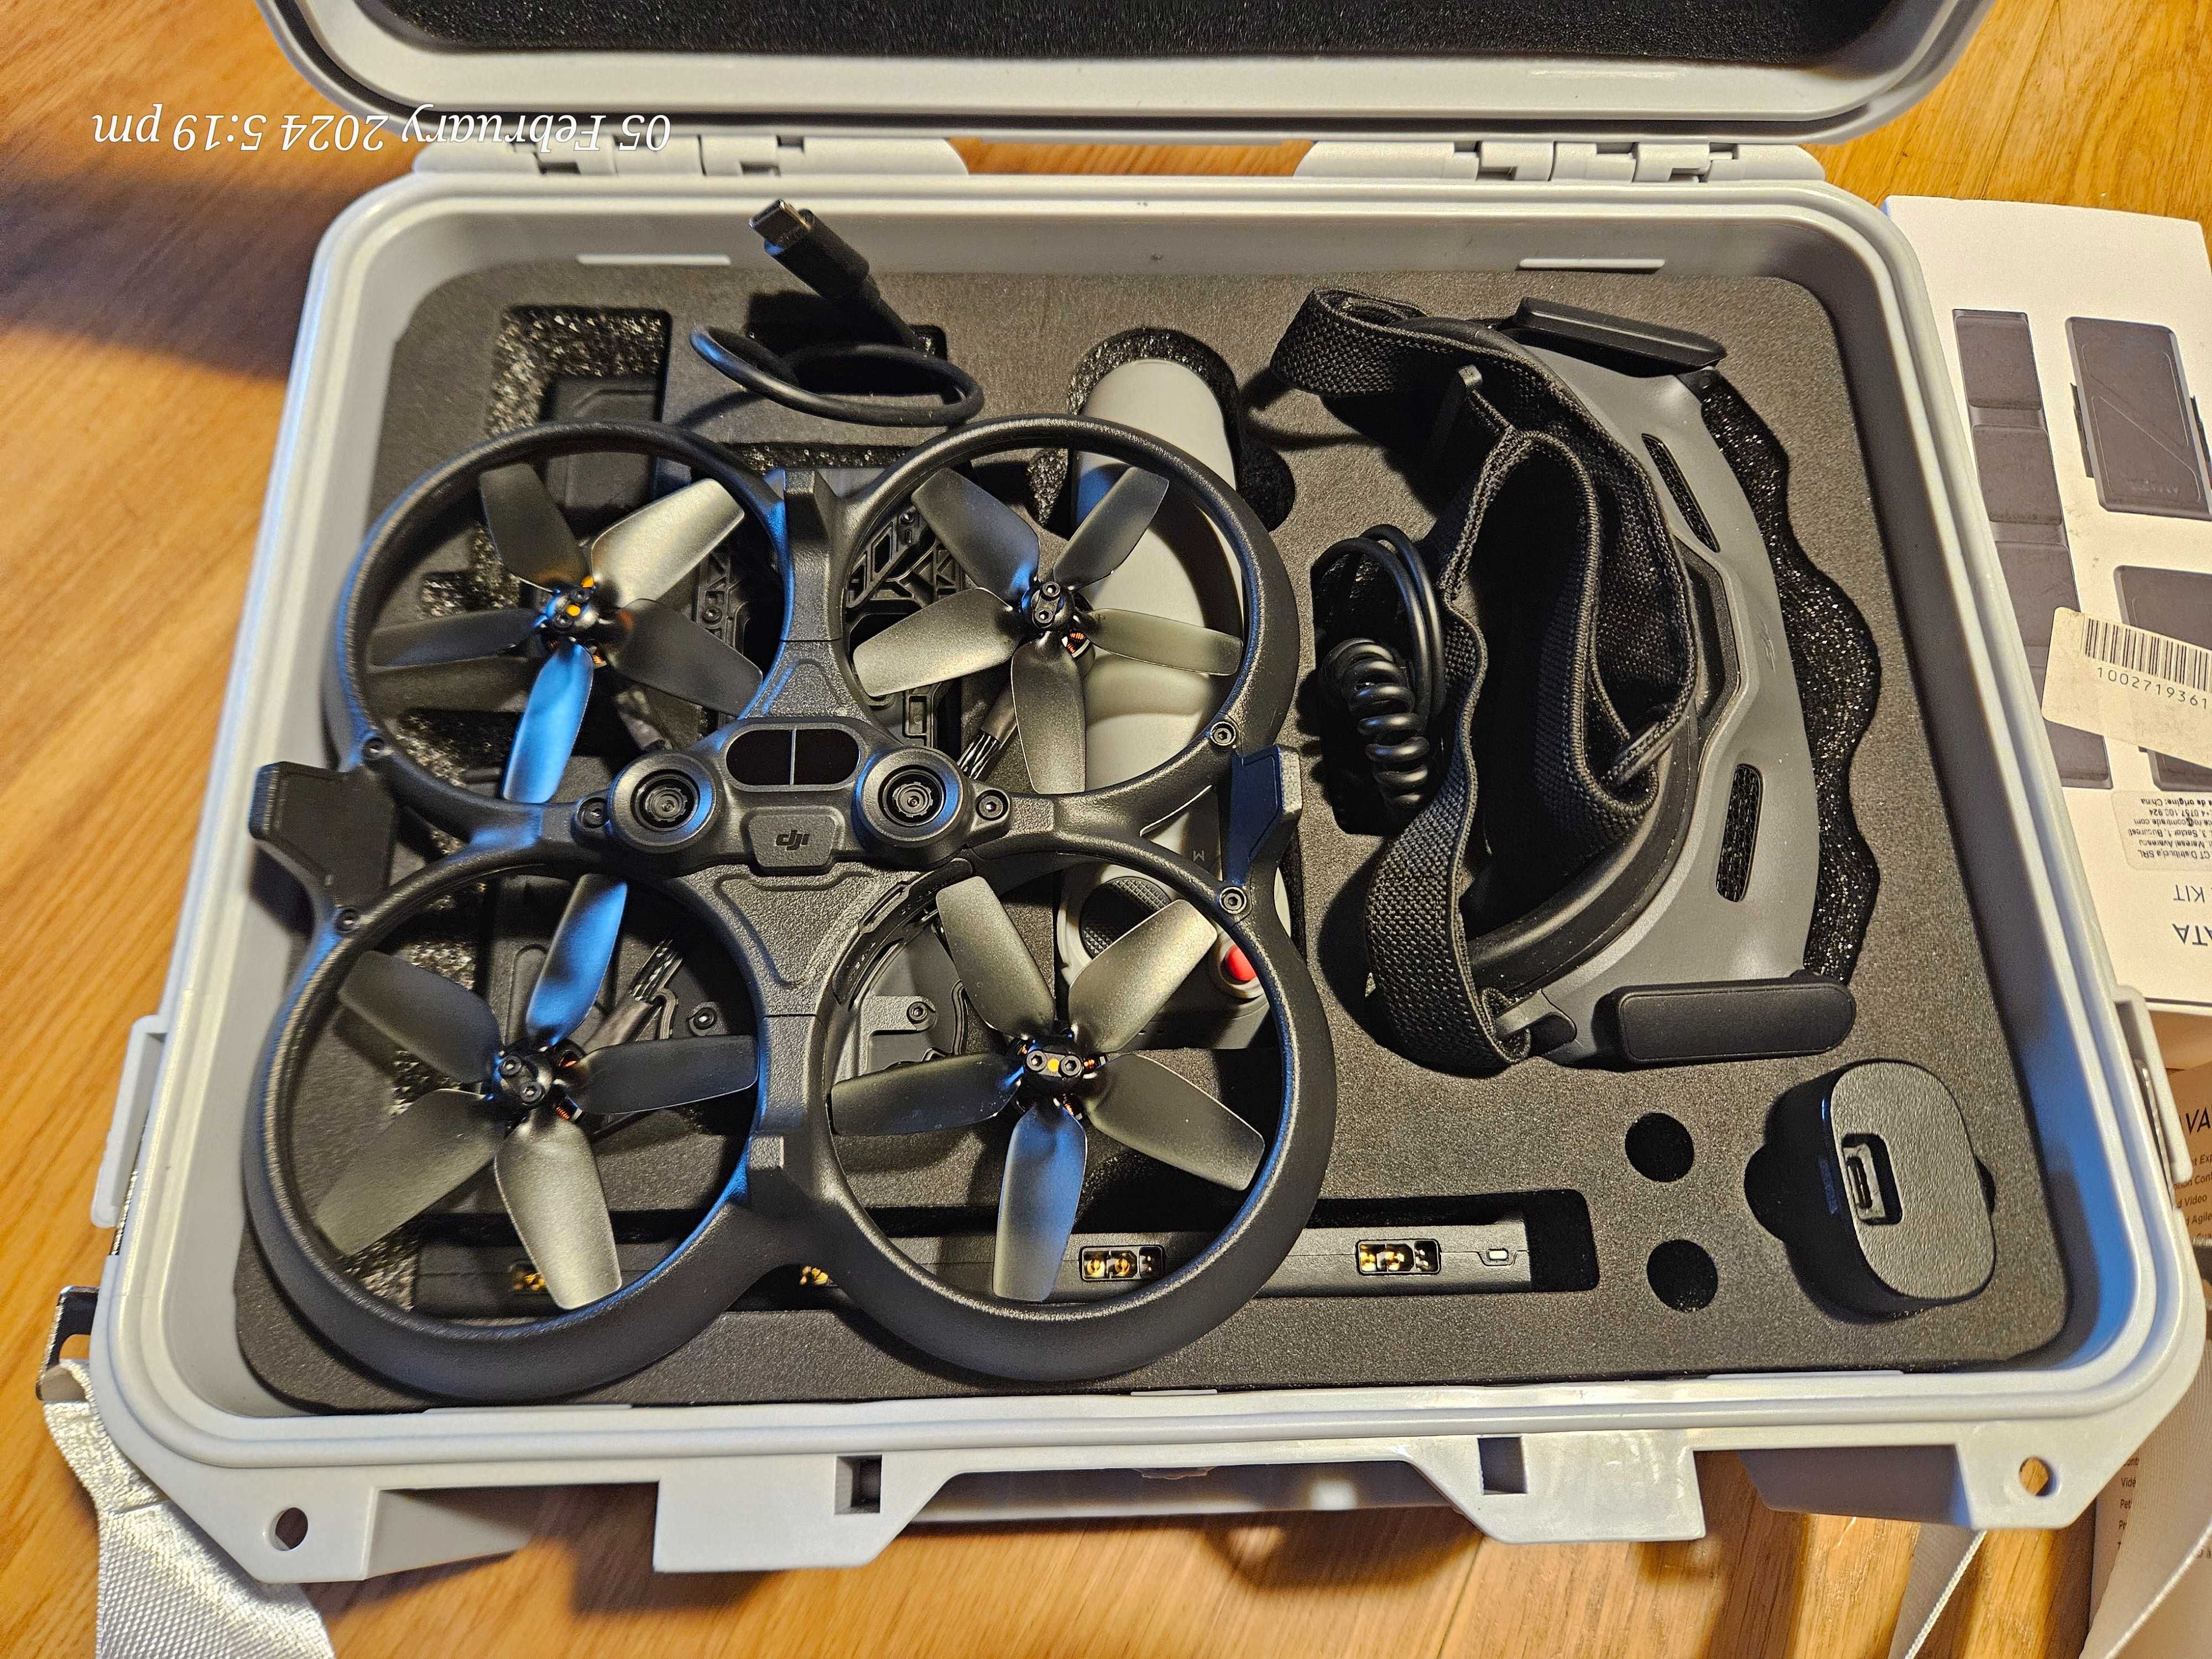 Drona Dji avata googles VR + kit fly more + hard case